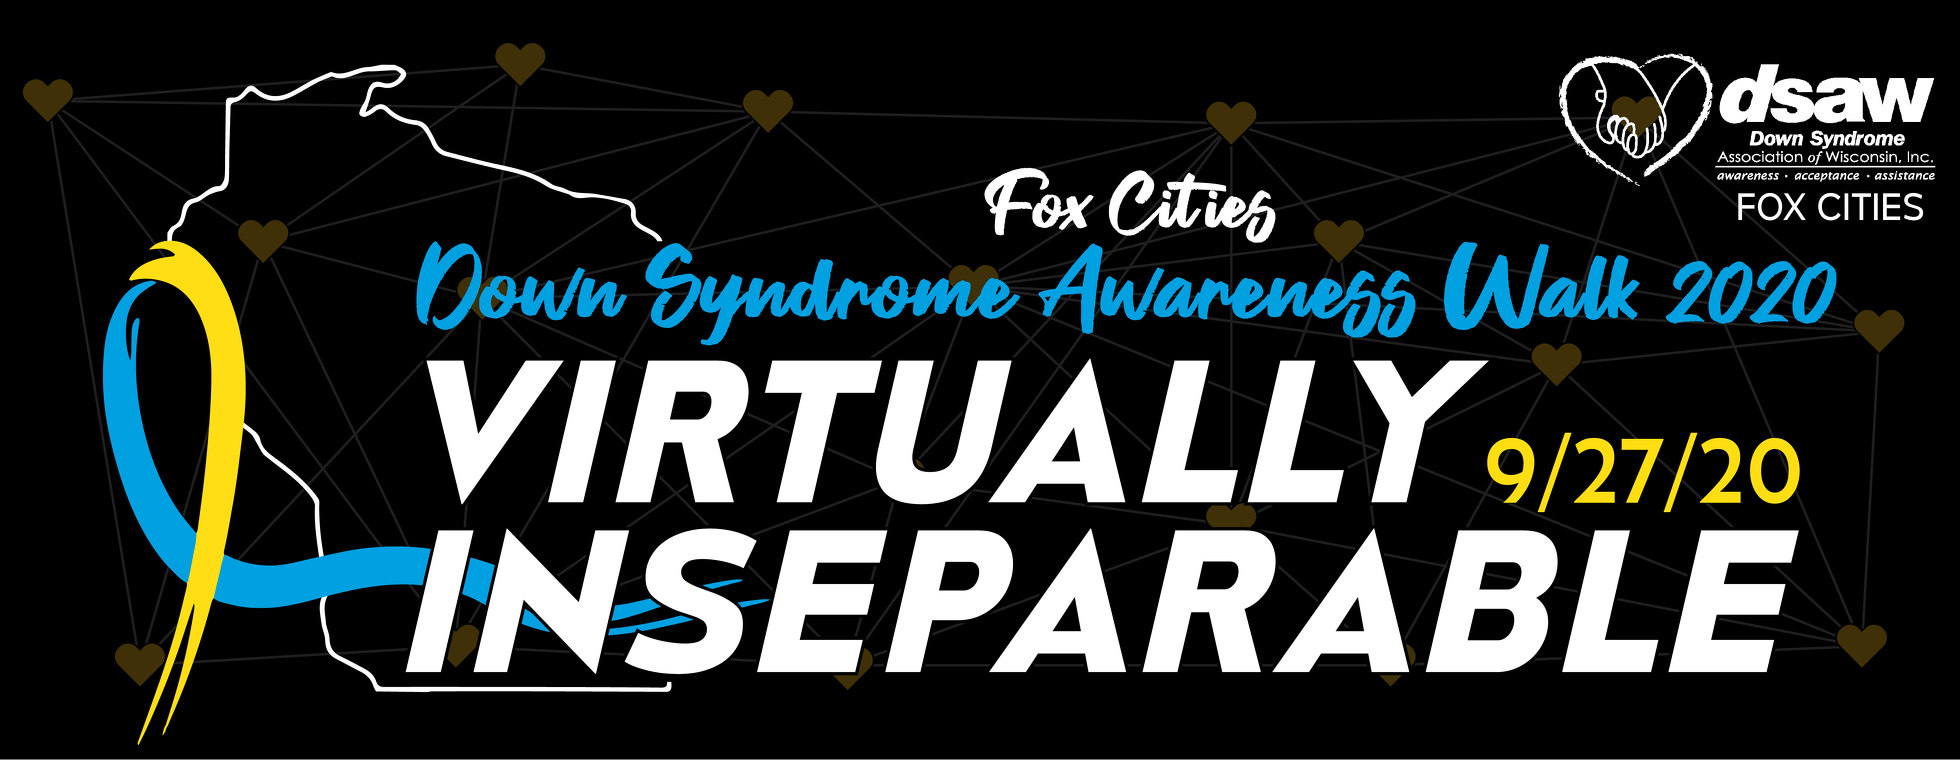 Fox Cities Down Syndrome Awareness Walk 2020